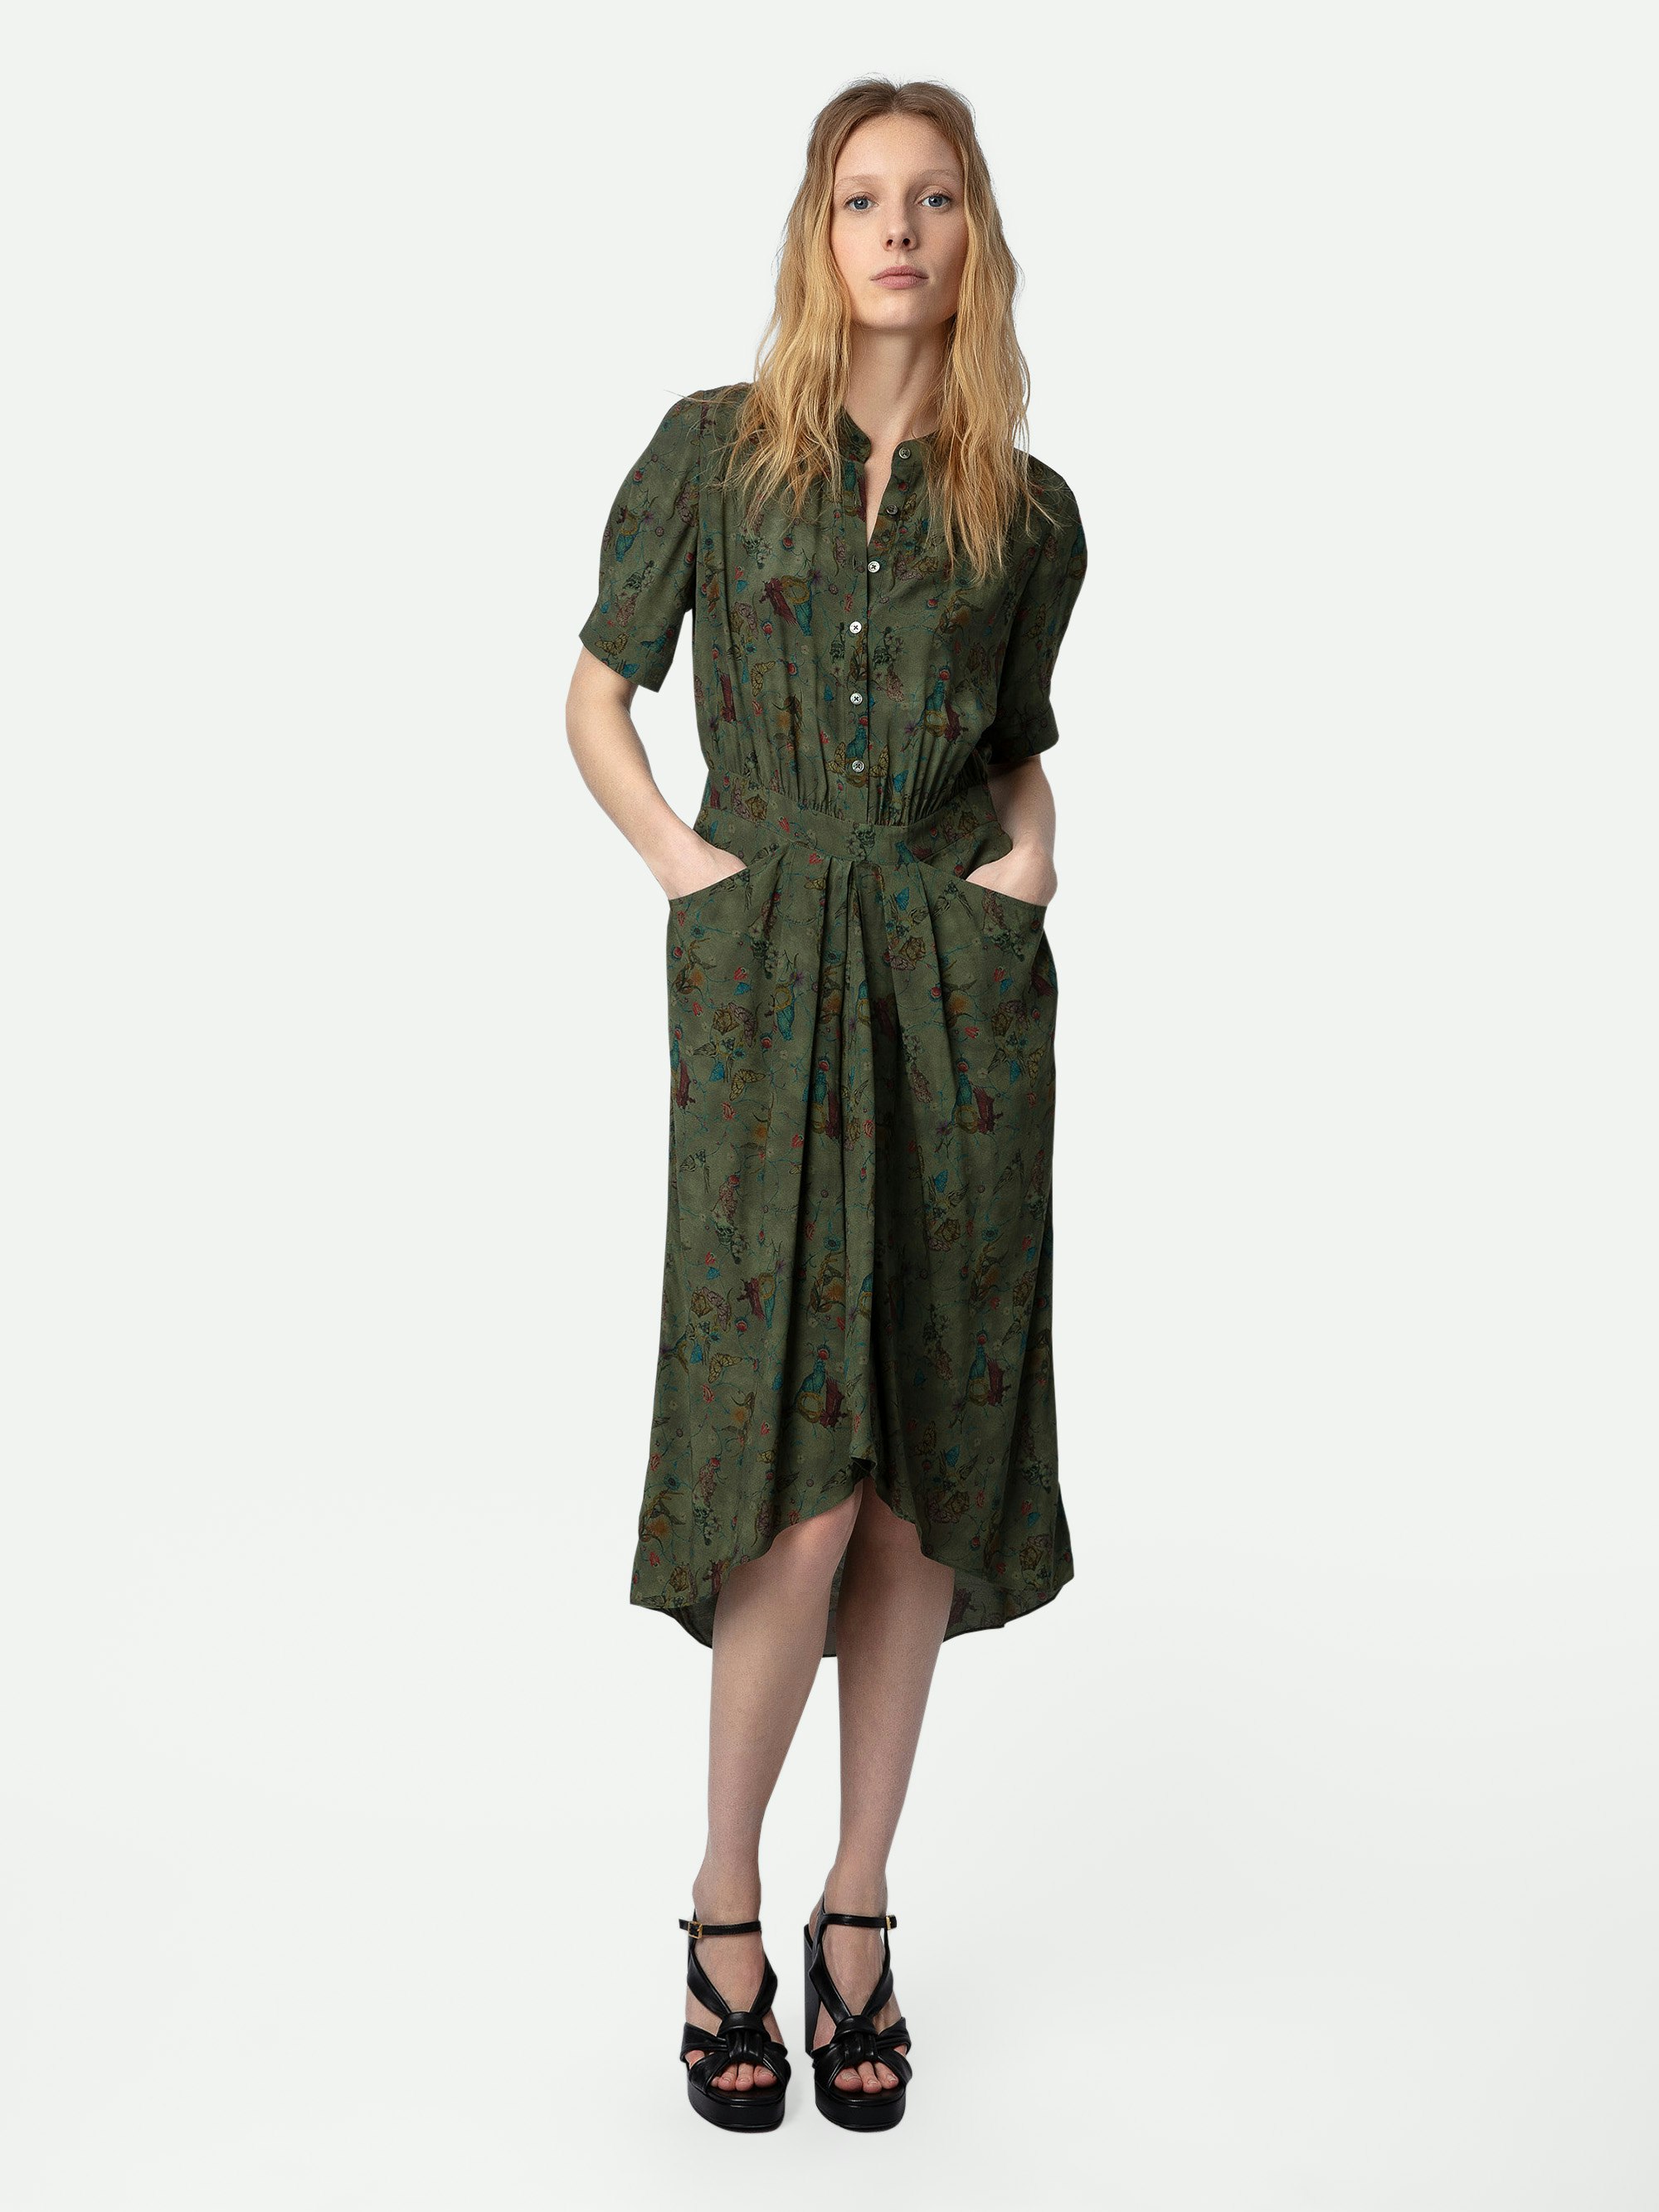 Rima Dress - Printed khaki midi dress with short sleeves and asymmetric skirt.